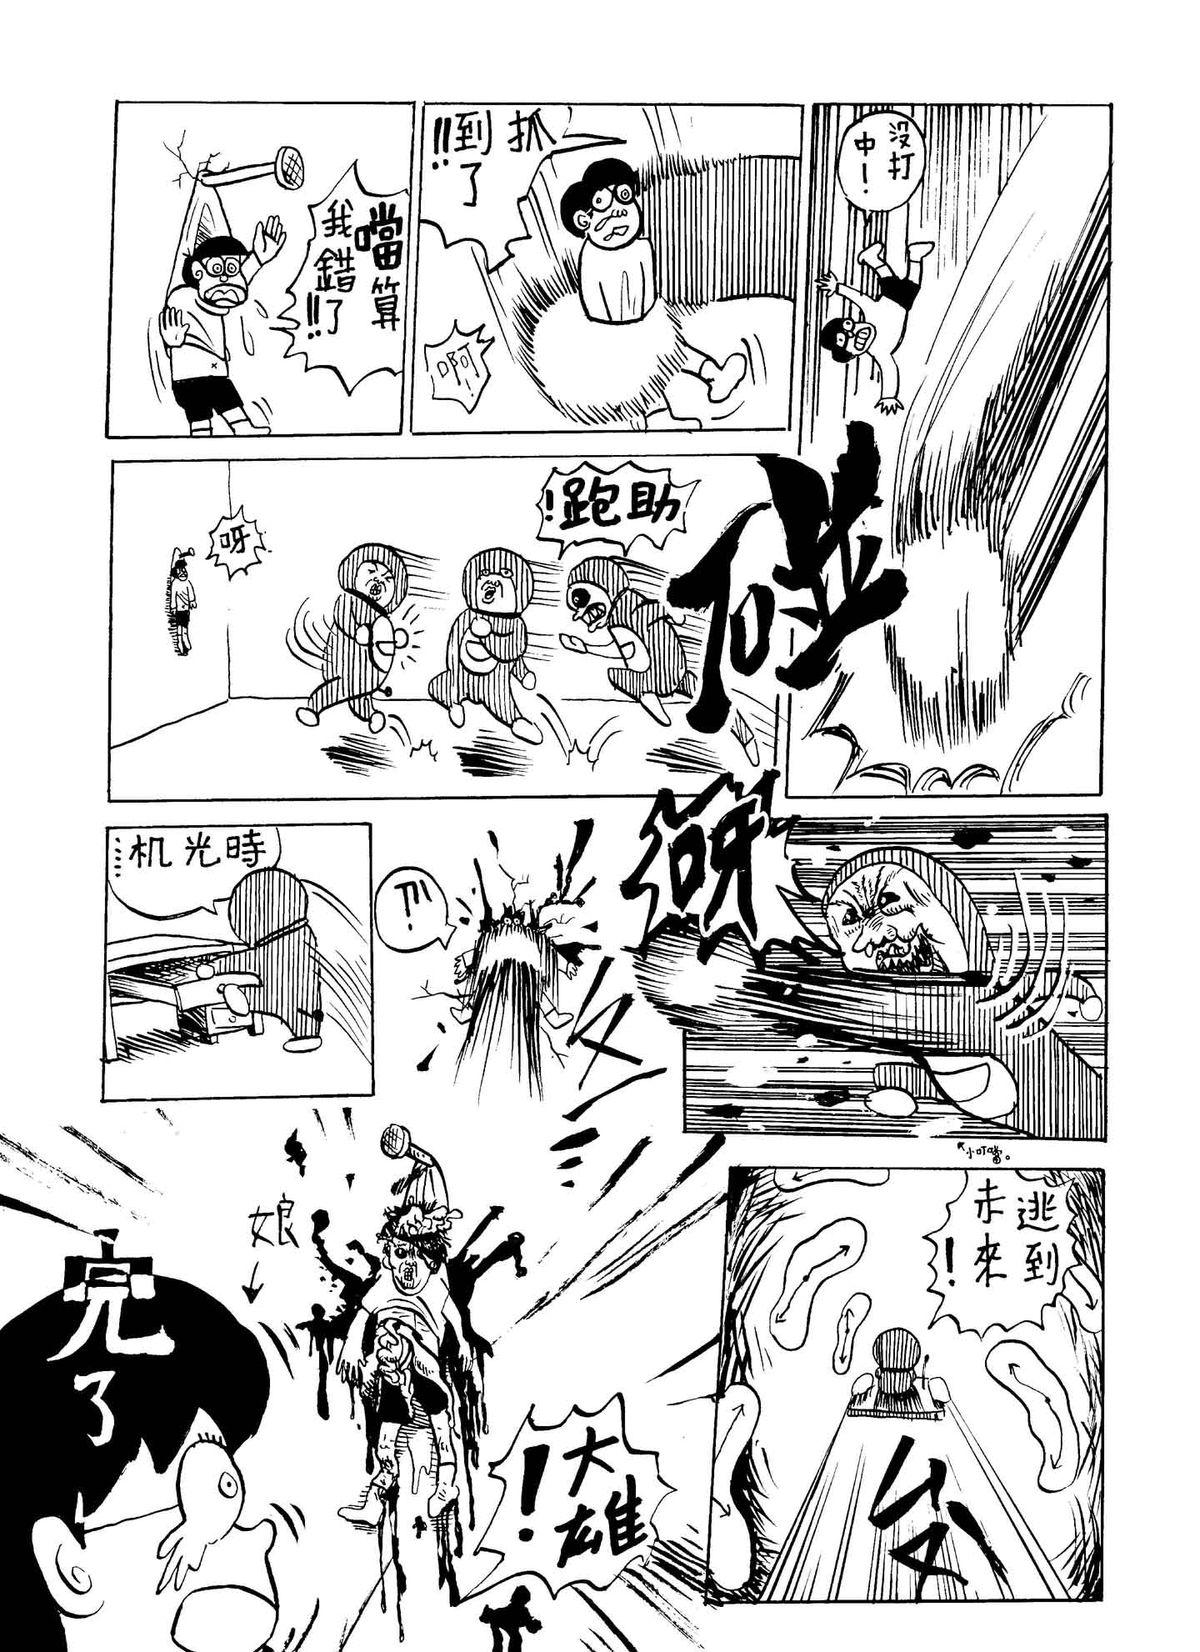 Pareja Xiao Ding Dang! - Doraemon Soloboy - Page 3